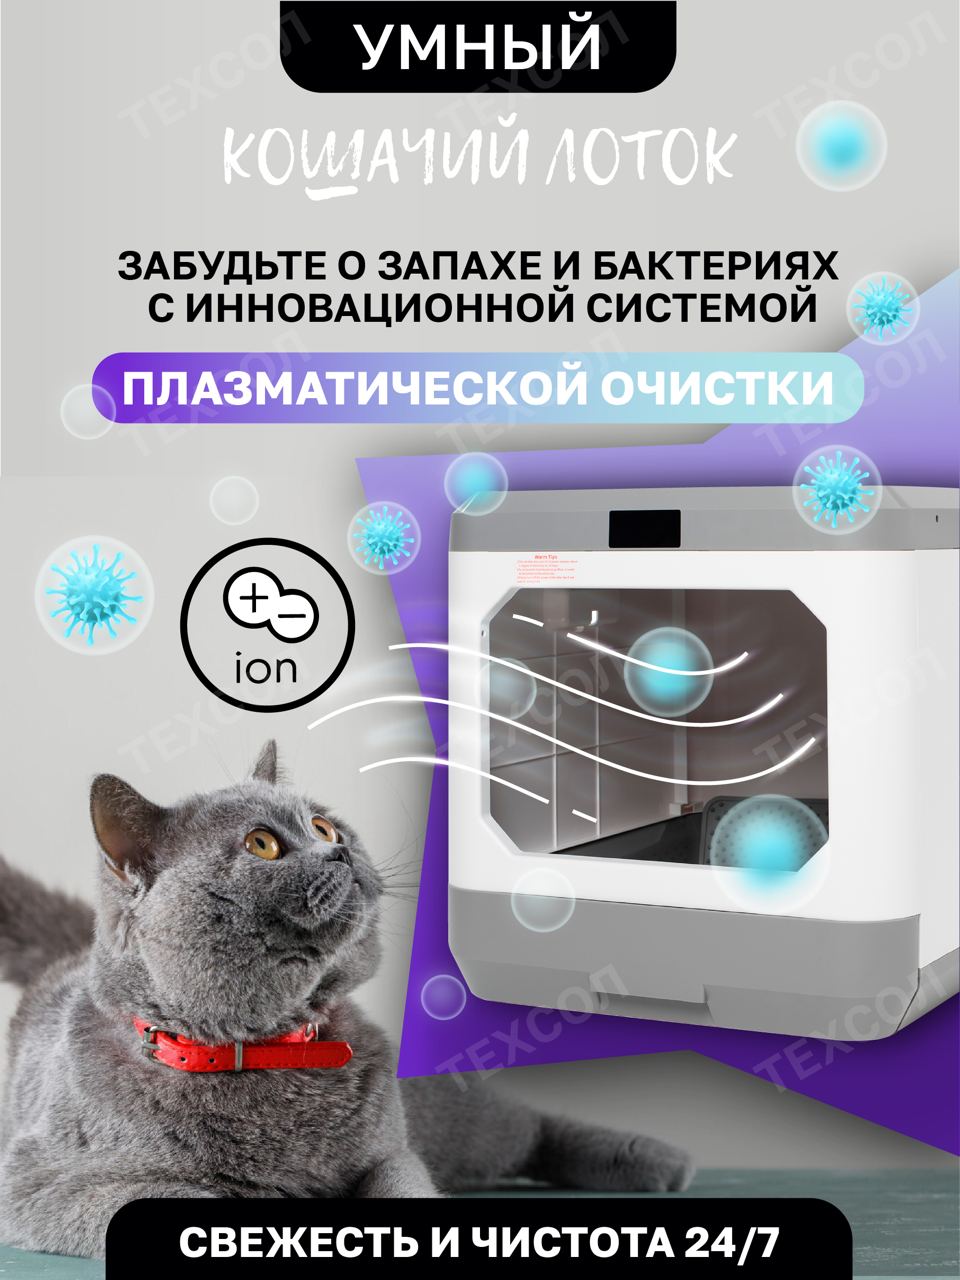 Лоток для кошек Техсол T101S001 с автоматической очисткой, белый, ABS -пластик, 48x40x42см